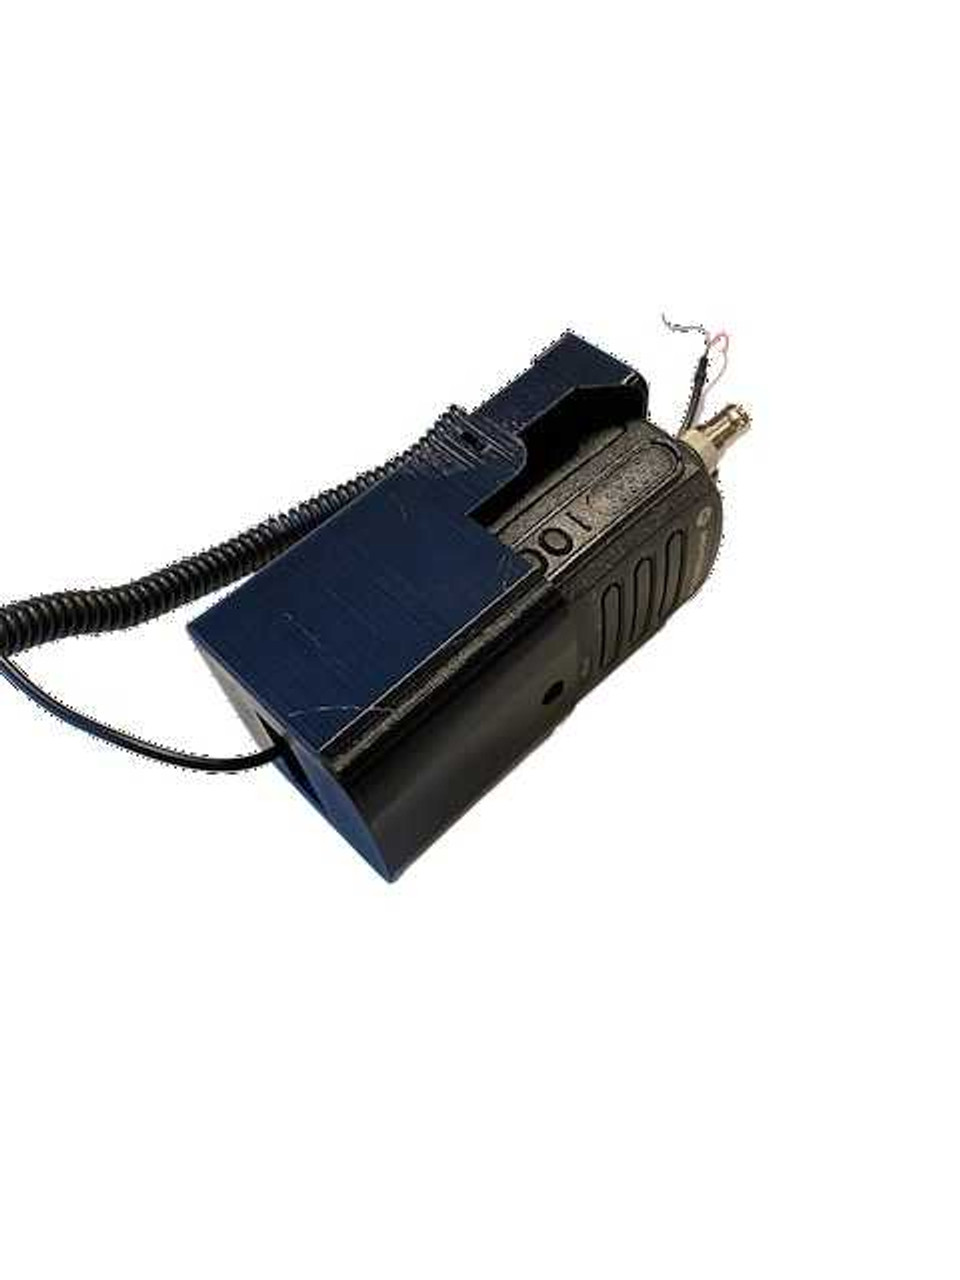 Motorola DP1400 - CP040 battery eliminator